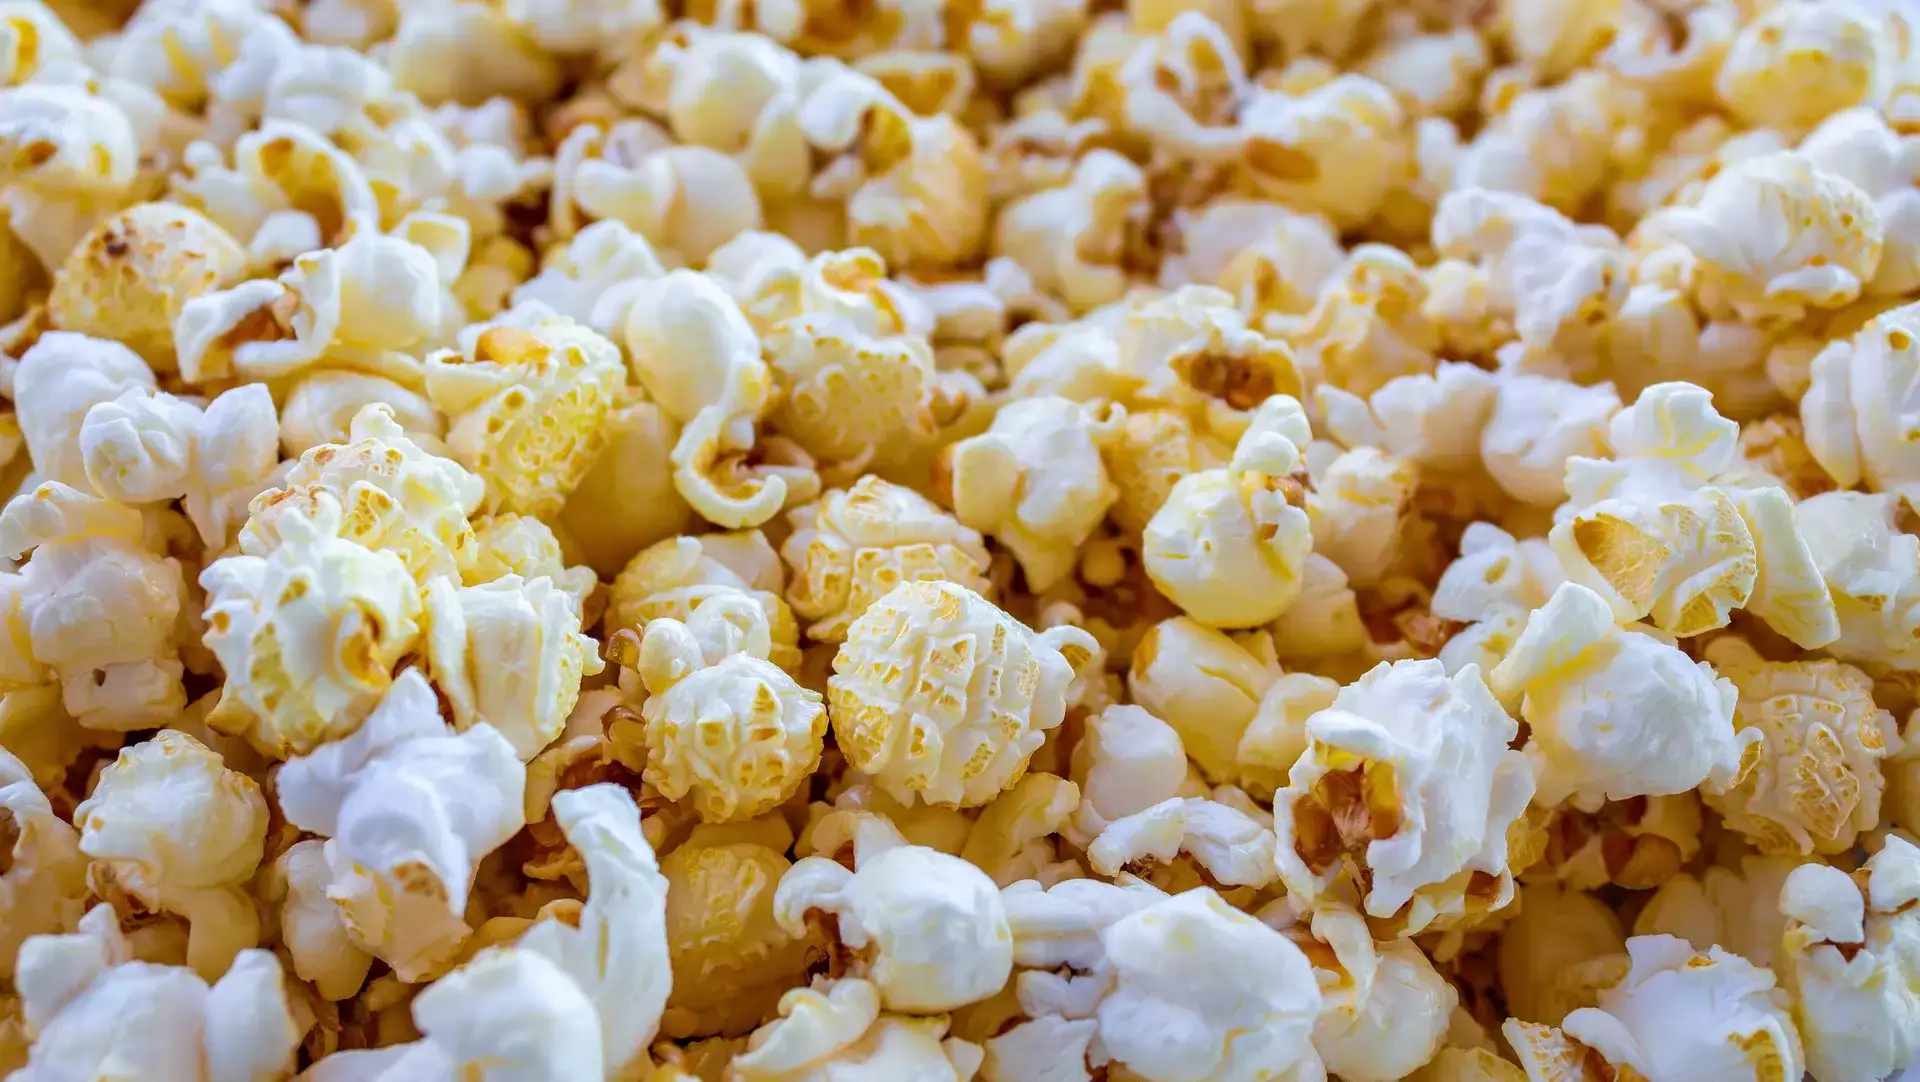 How to make cinema-style popcorn